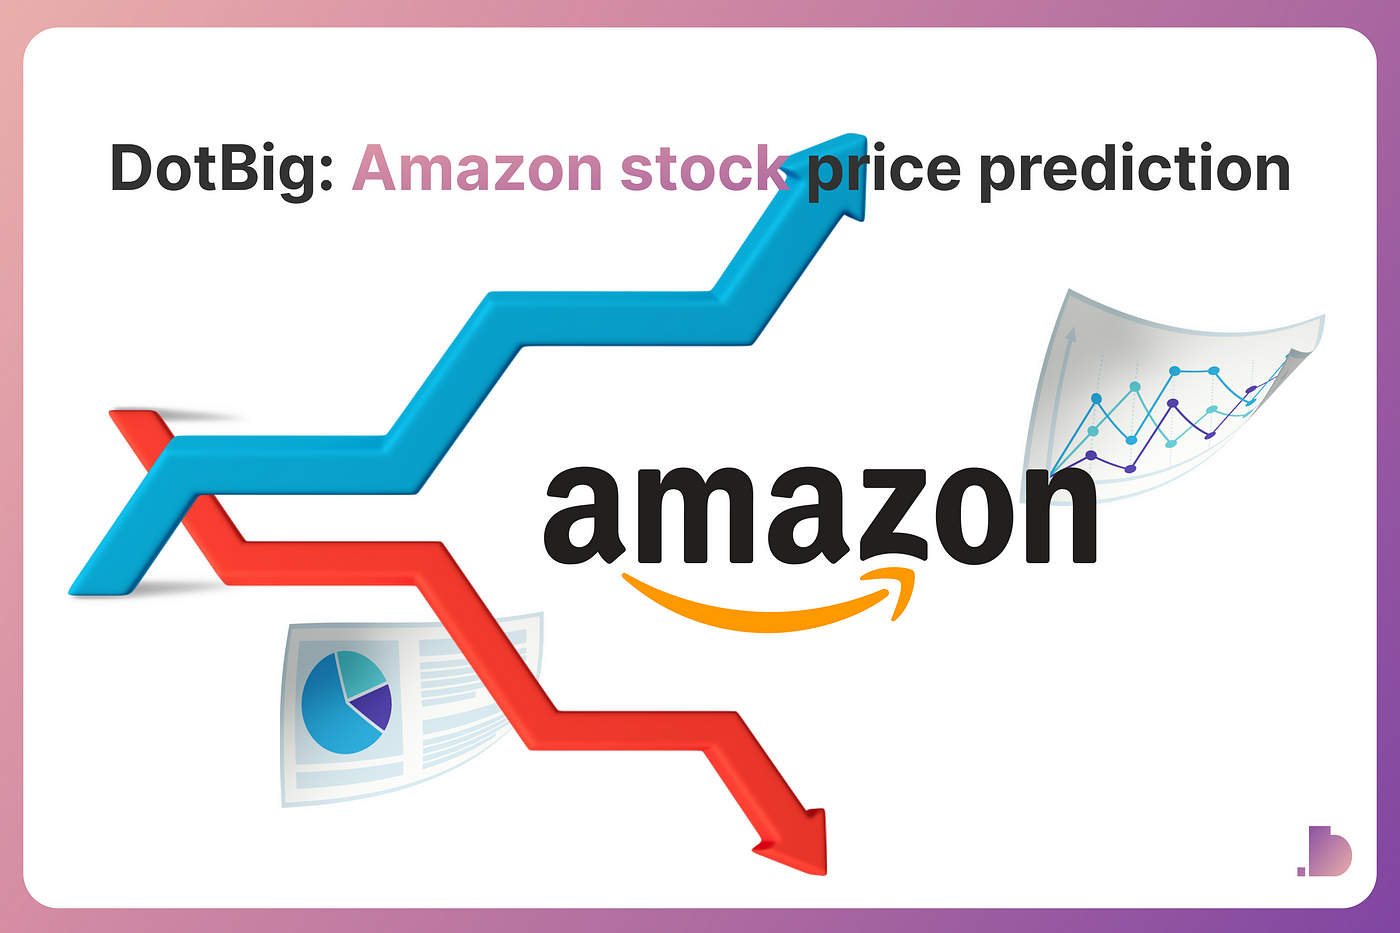 DotBig: Amazon stock price prediction